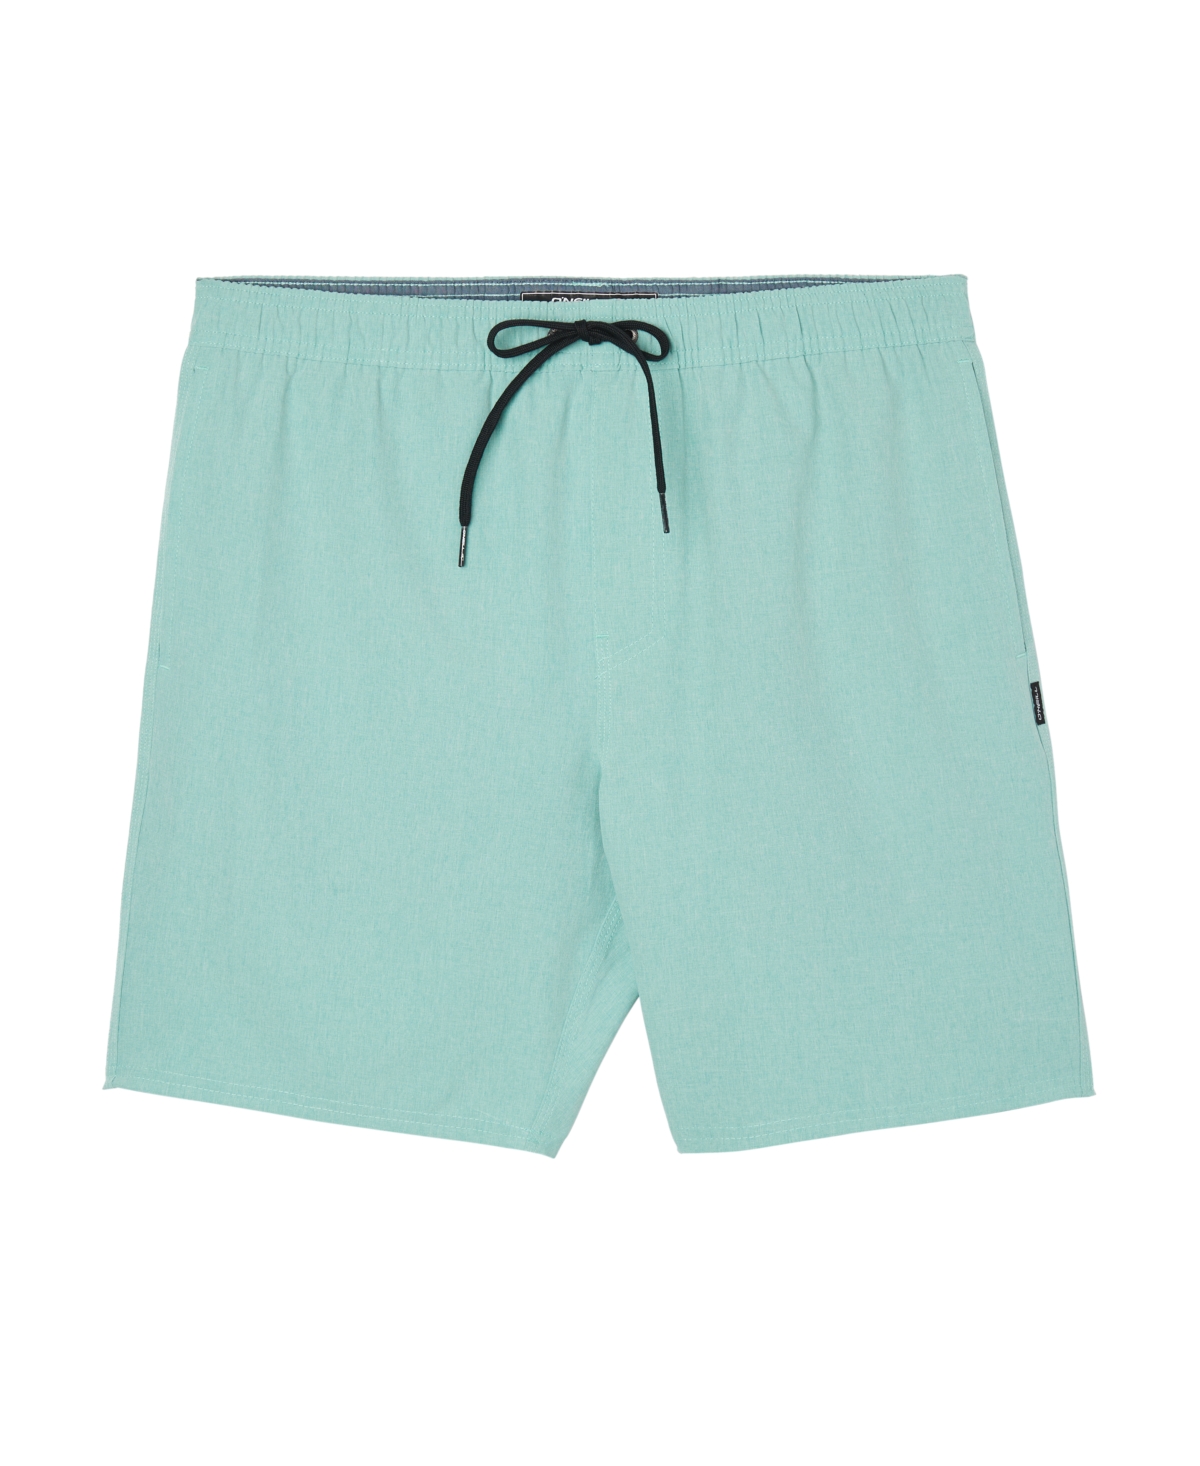 Men's Reserve 18" Elastic Waist Hybrid Shorts - Aqua Wash